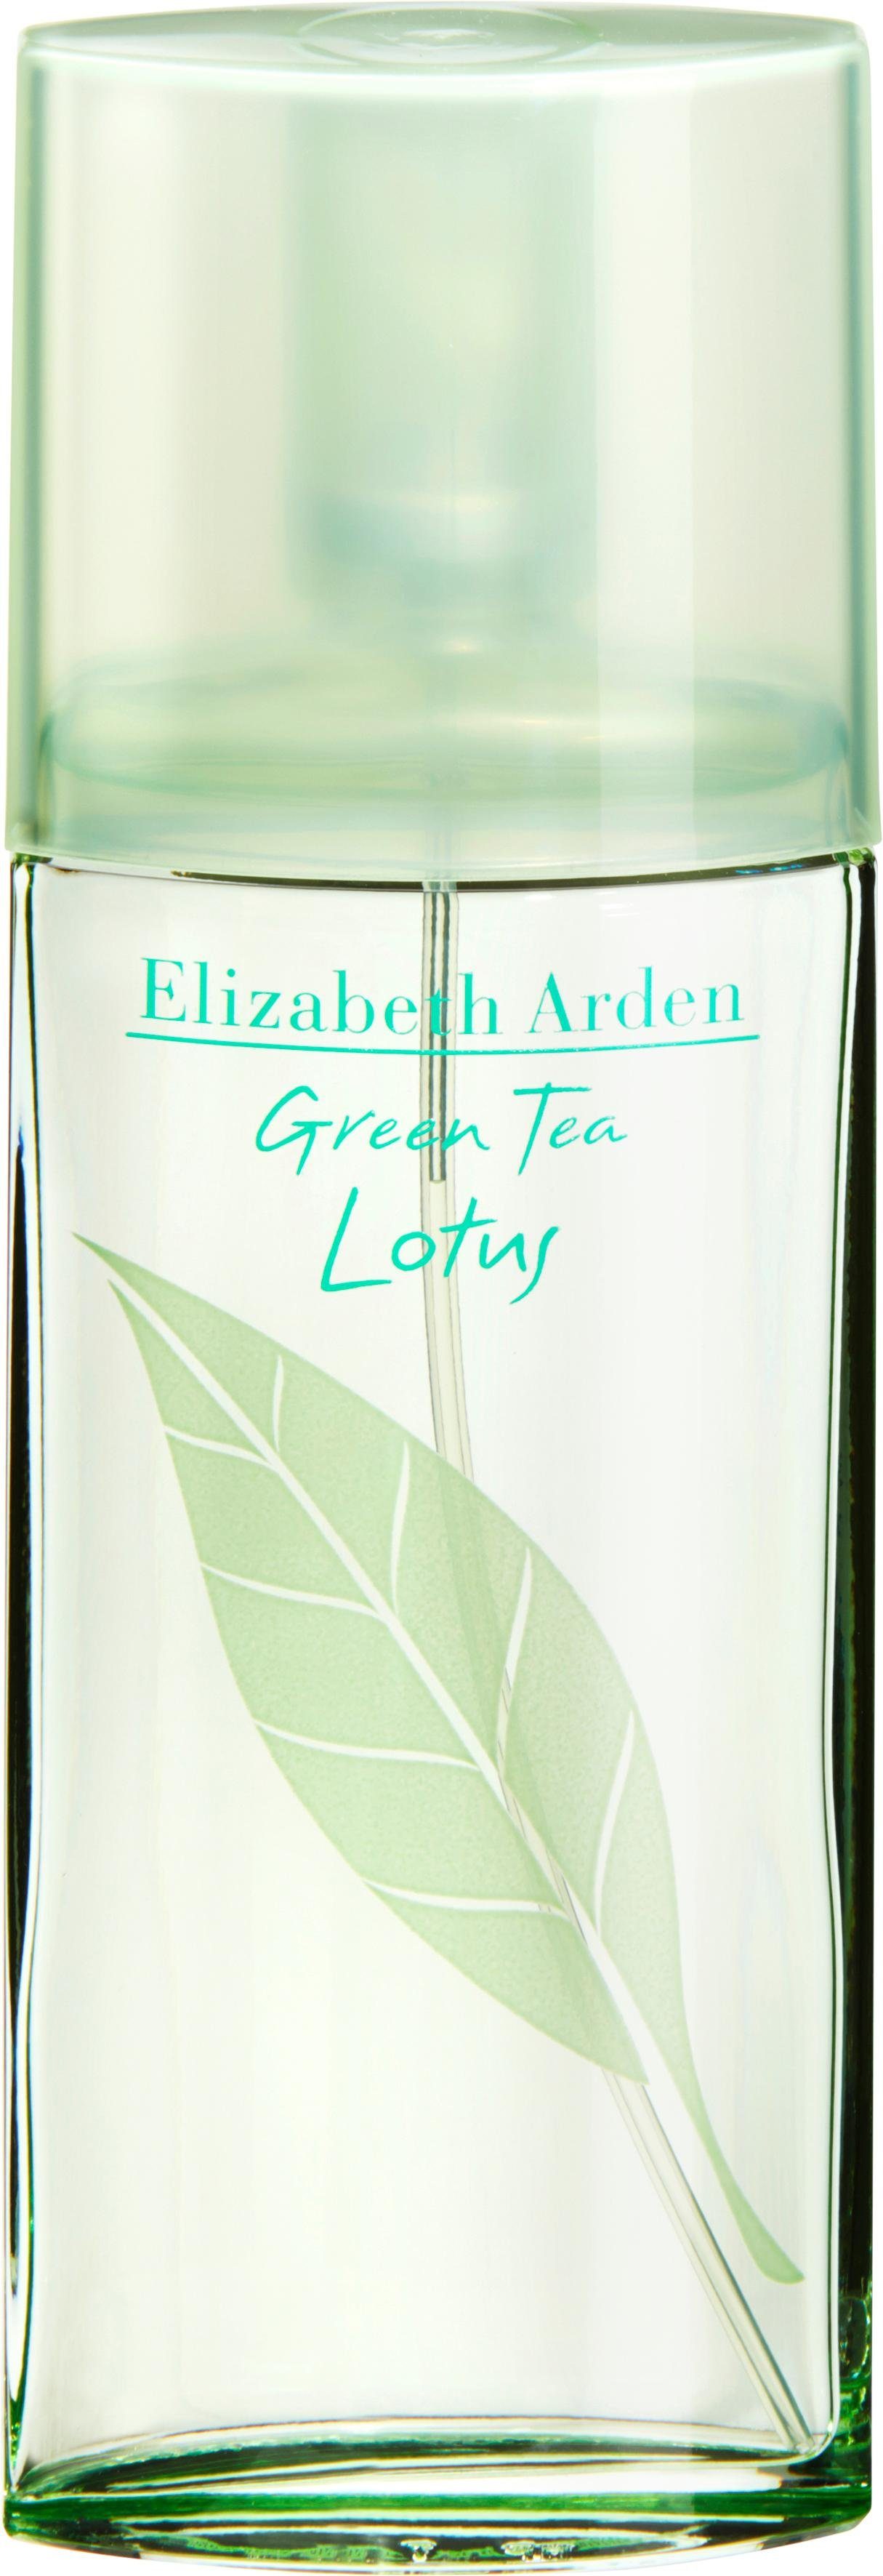 Lotus Toilette Arden Eau Tea Elizabeth de Green